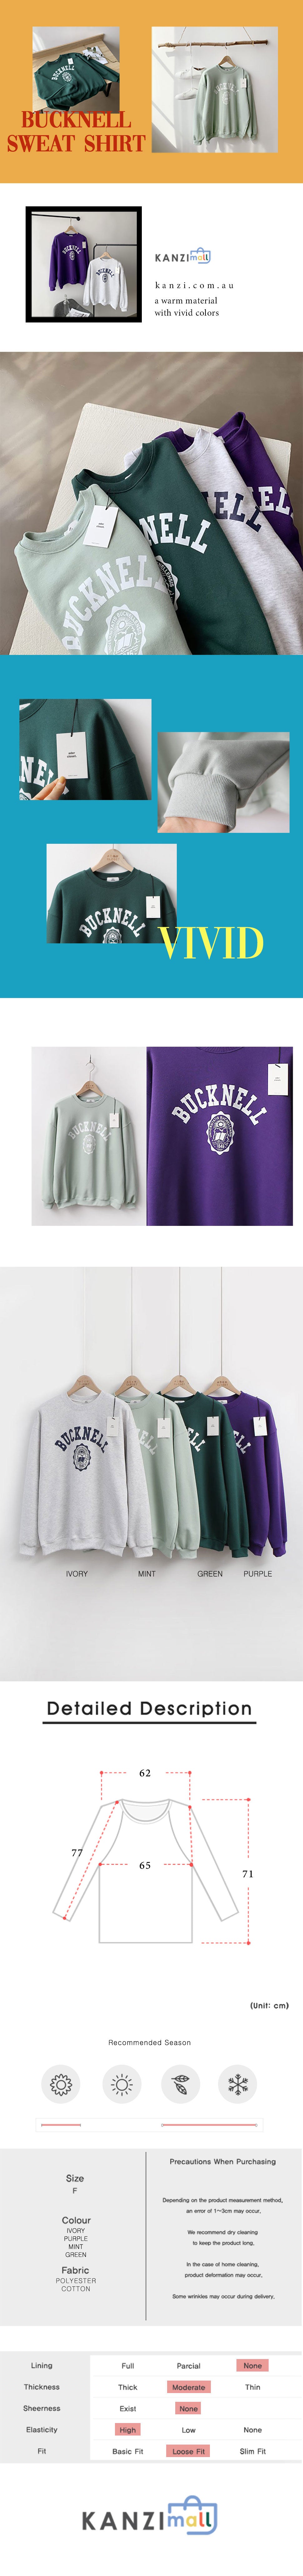 bucknell sweat shirt spring fashion Korean ootd style stylish Australia online shopping mall